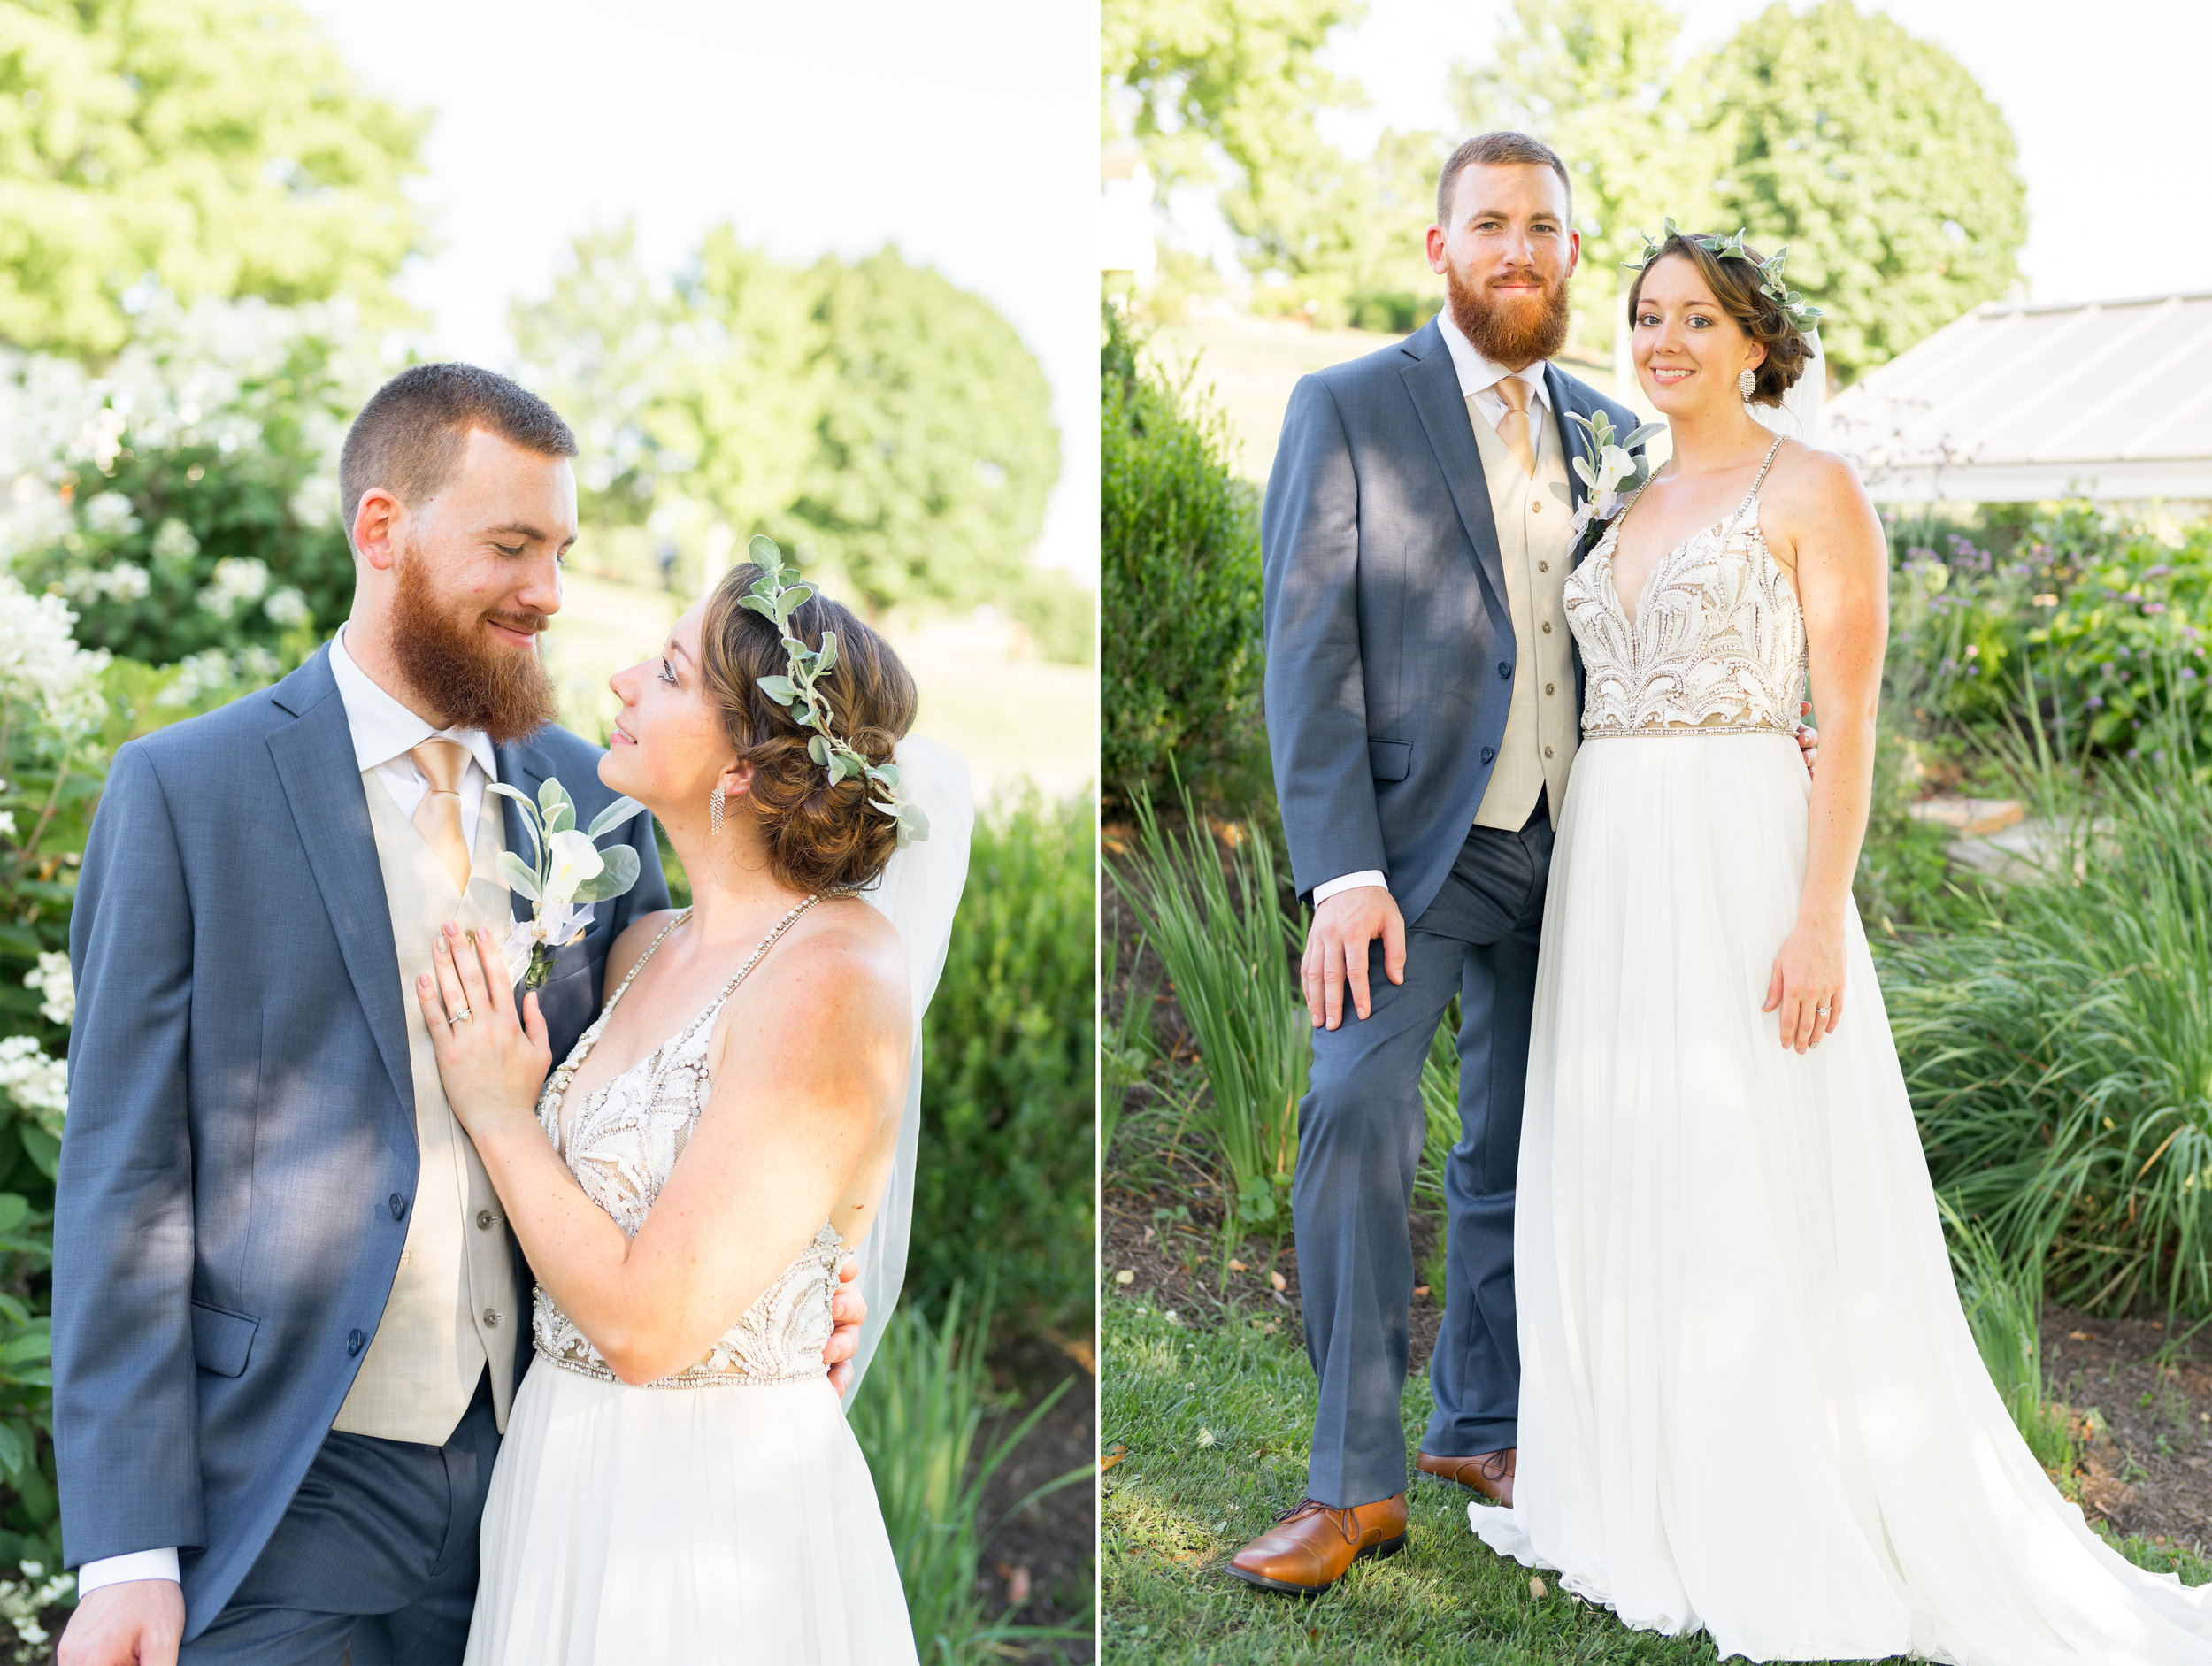 Gorgeous bride and groom photos at Glen Ellen Farm in July